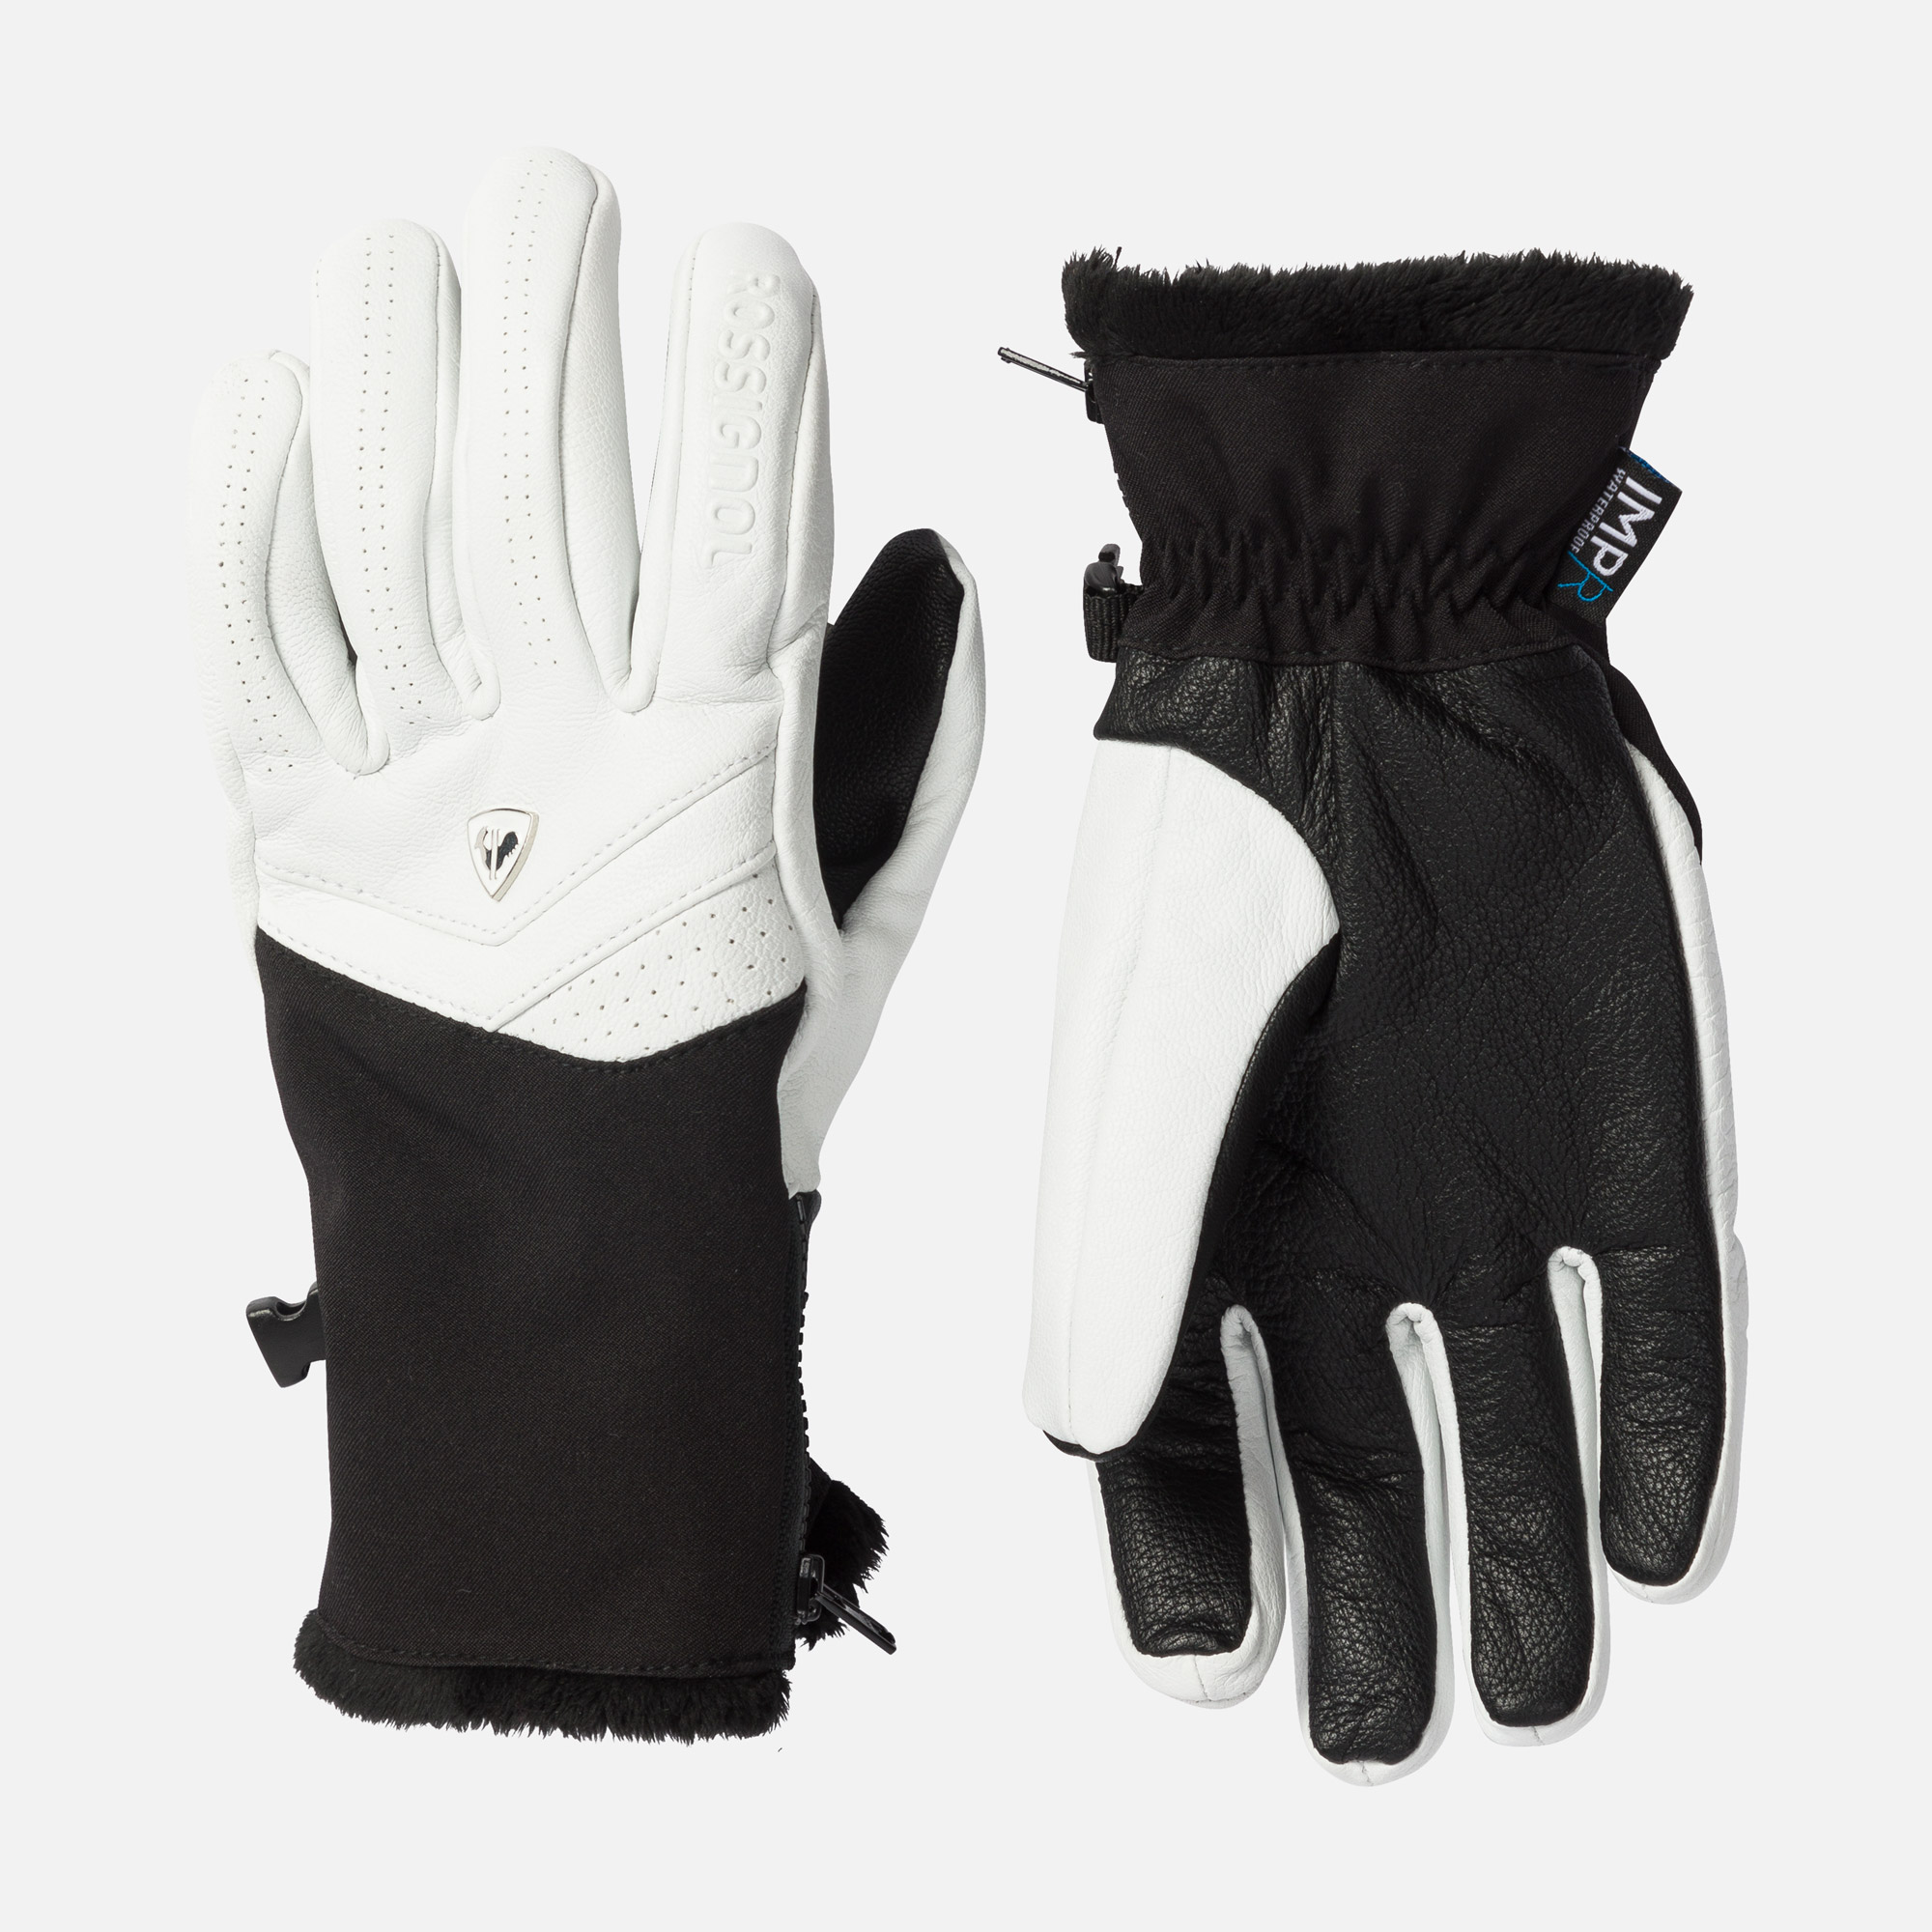 Women's Elite leather waterproof ski gloves